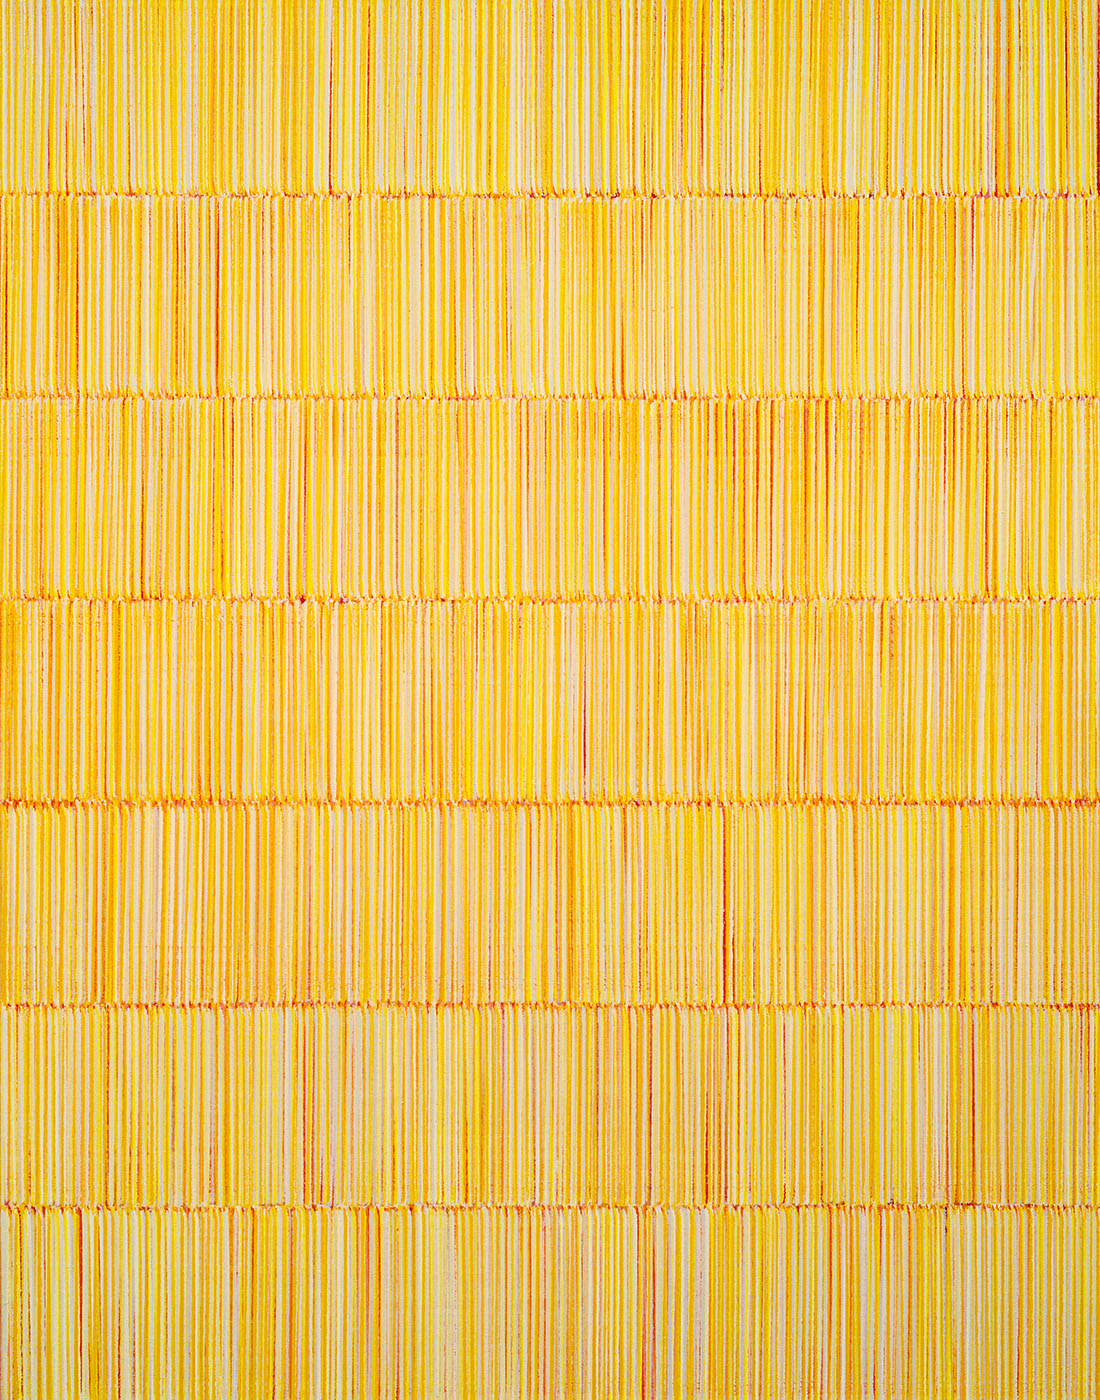 Nikola Dimitrov, Farbraum OrangeGelb II, 2019, Pigmente, Bindemittel auf Leinwand, 140 × 110 cm